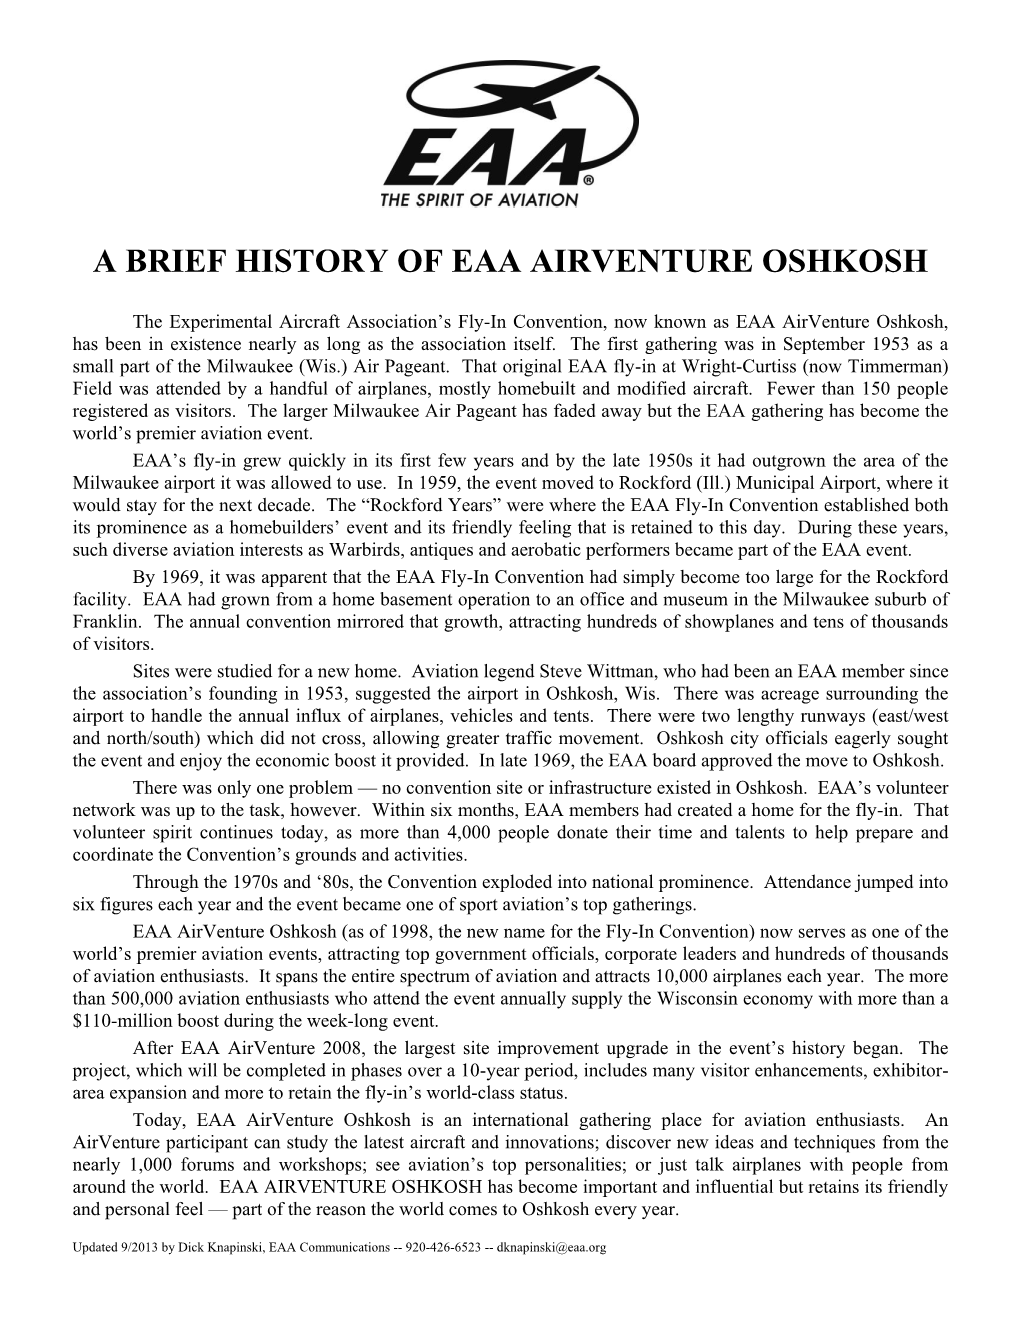 EAA Airventure History